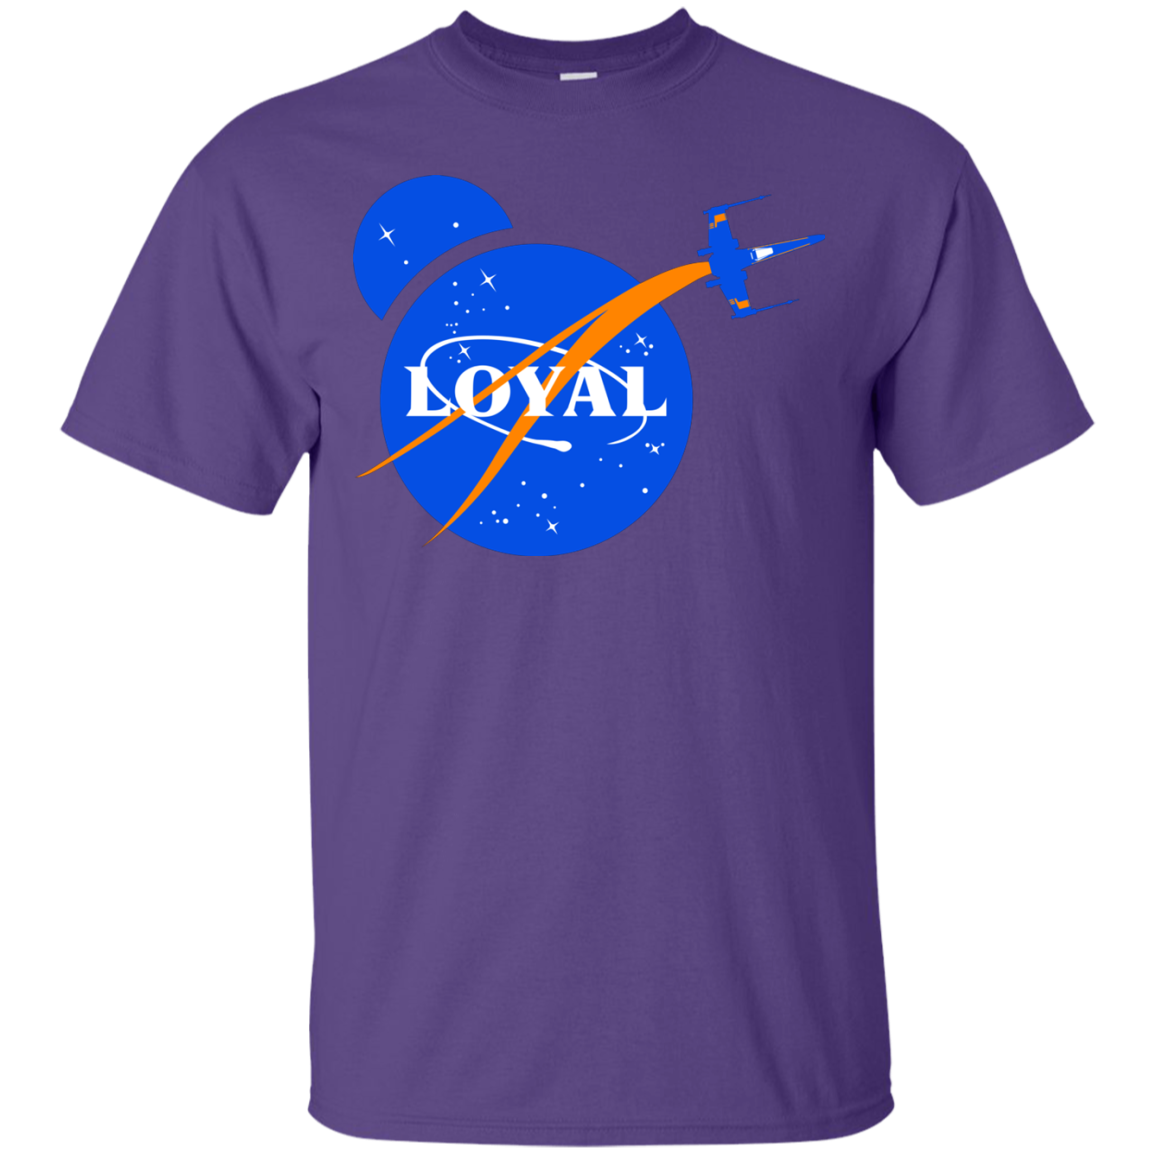 Nasa Dameron Loyal T-Shirt